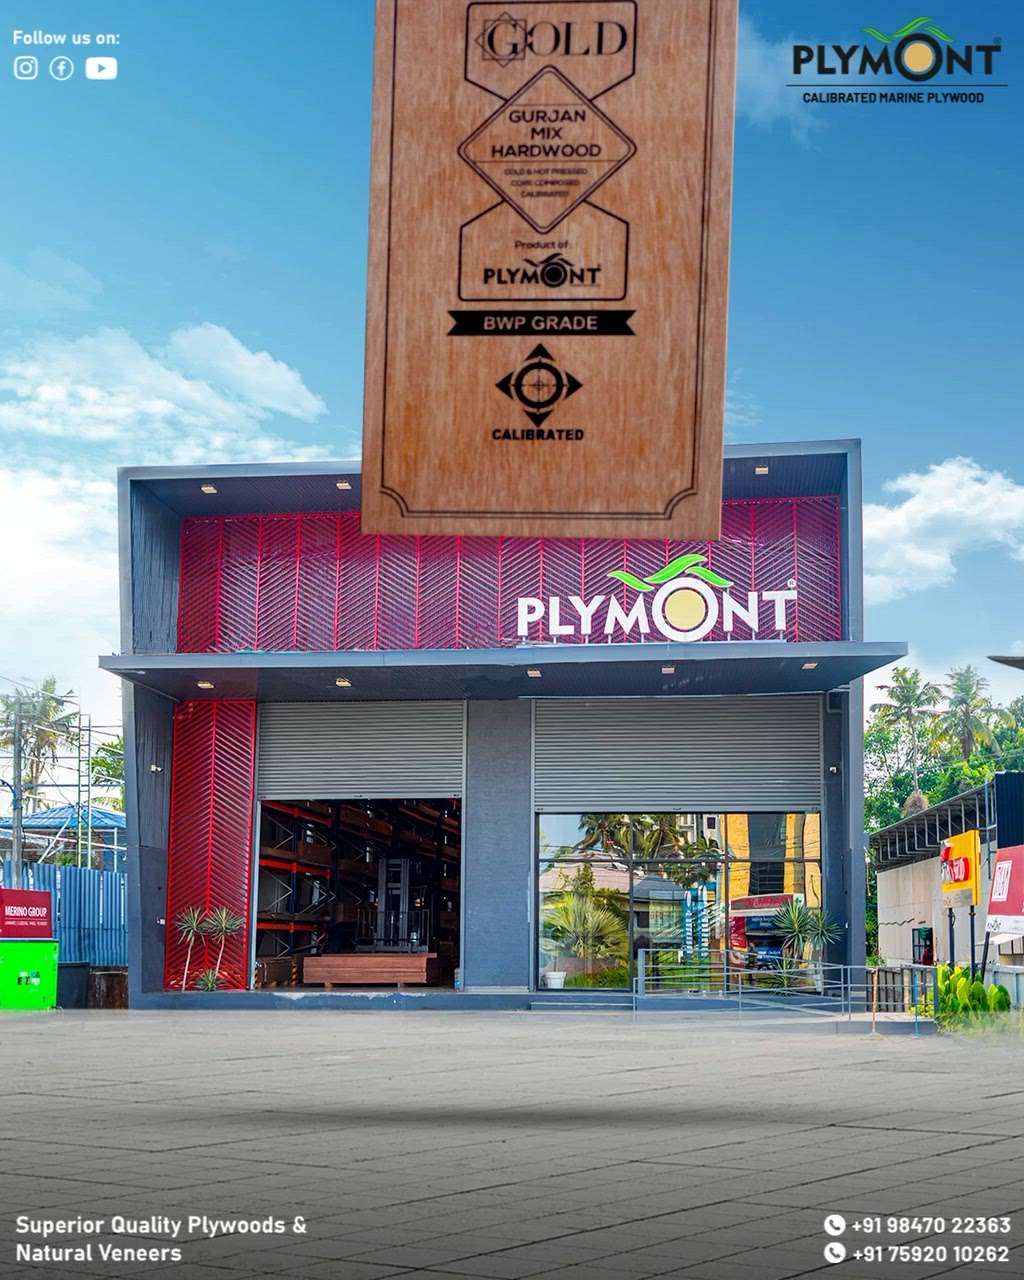 Strength & Stability in Every Sheet of Plymont Gold.

#interiors #interiordecor #interiordesign #plywood #plywooddesign #plymontclub #plywoodinterior #plywoodinteriors #Calibrated #calibrated #plywoodfurniture #plymontplywoods #kochi #plymont